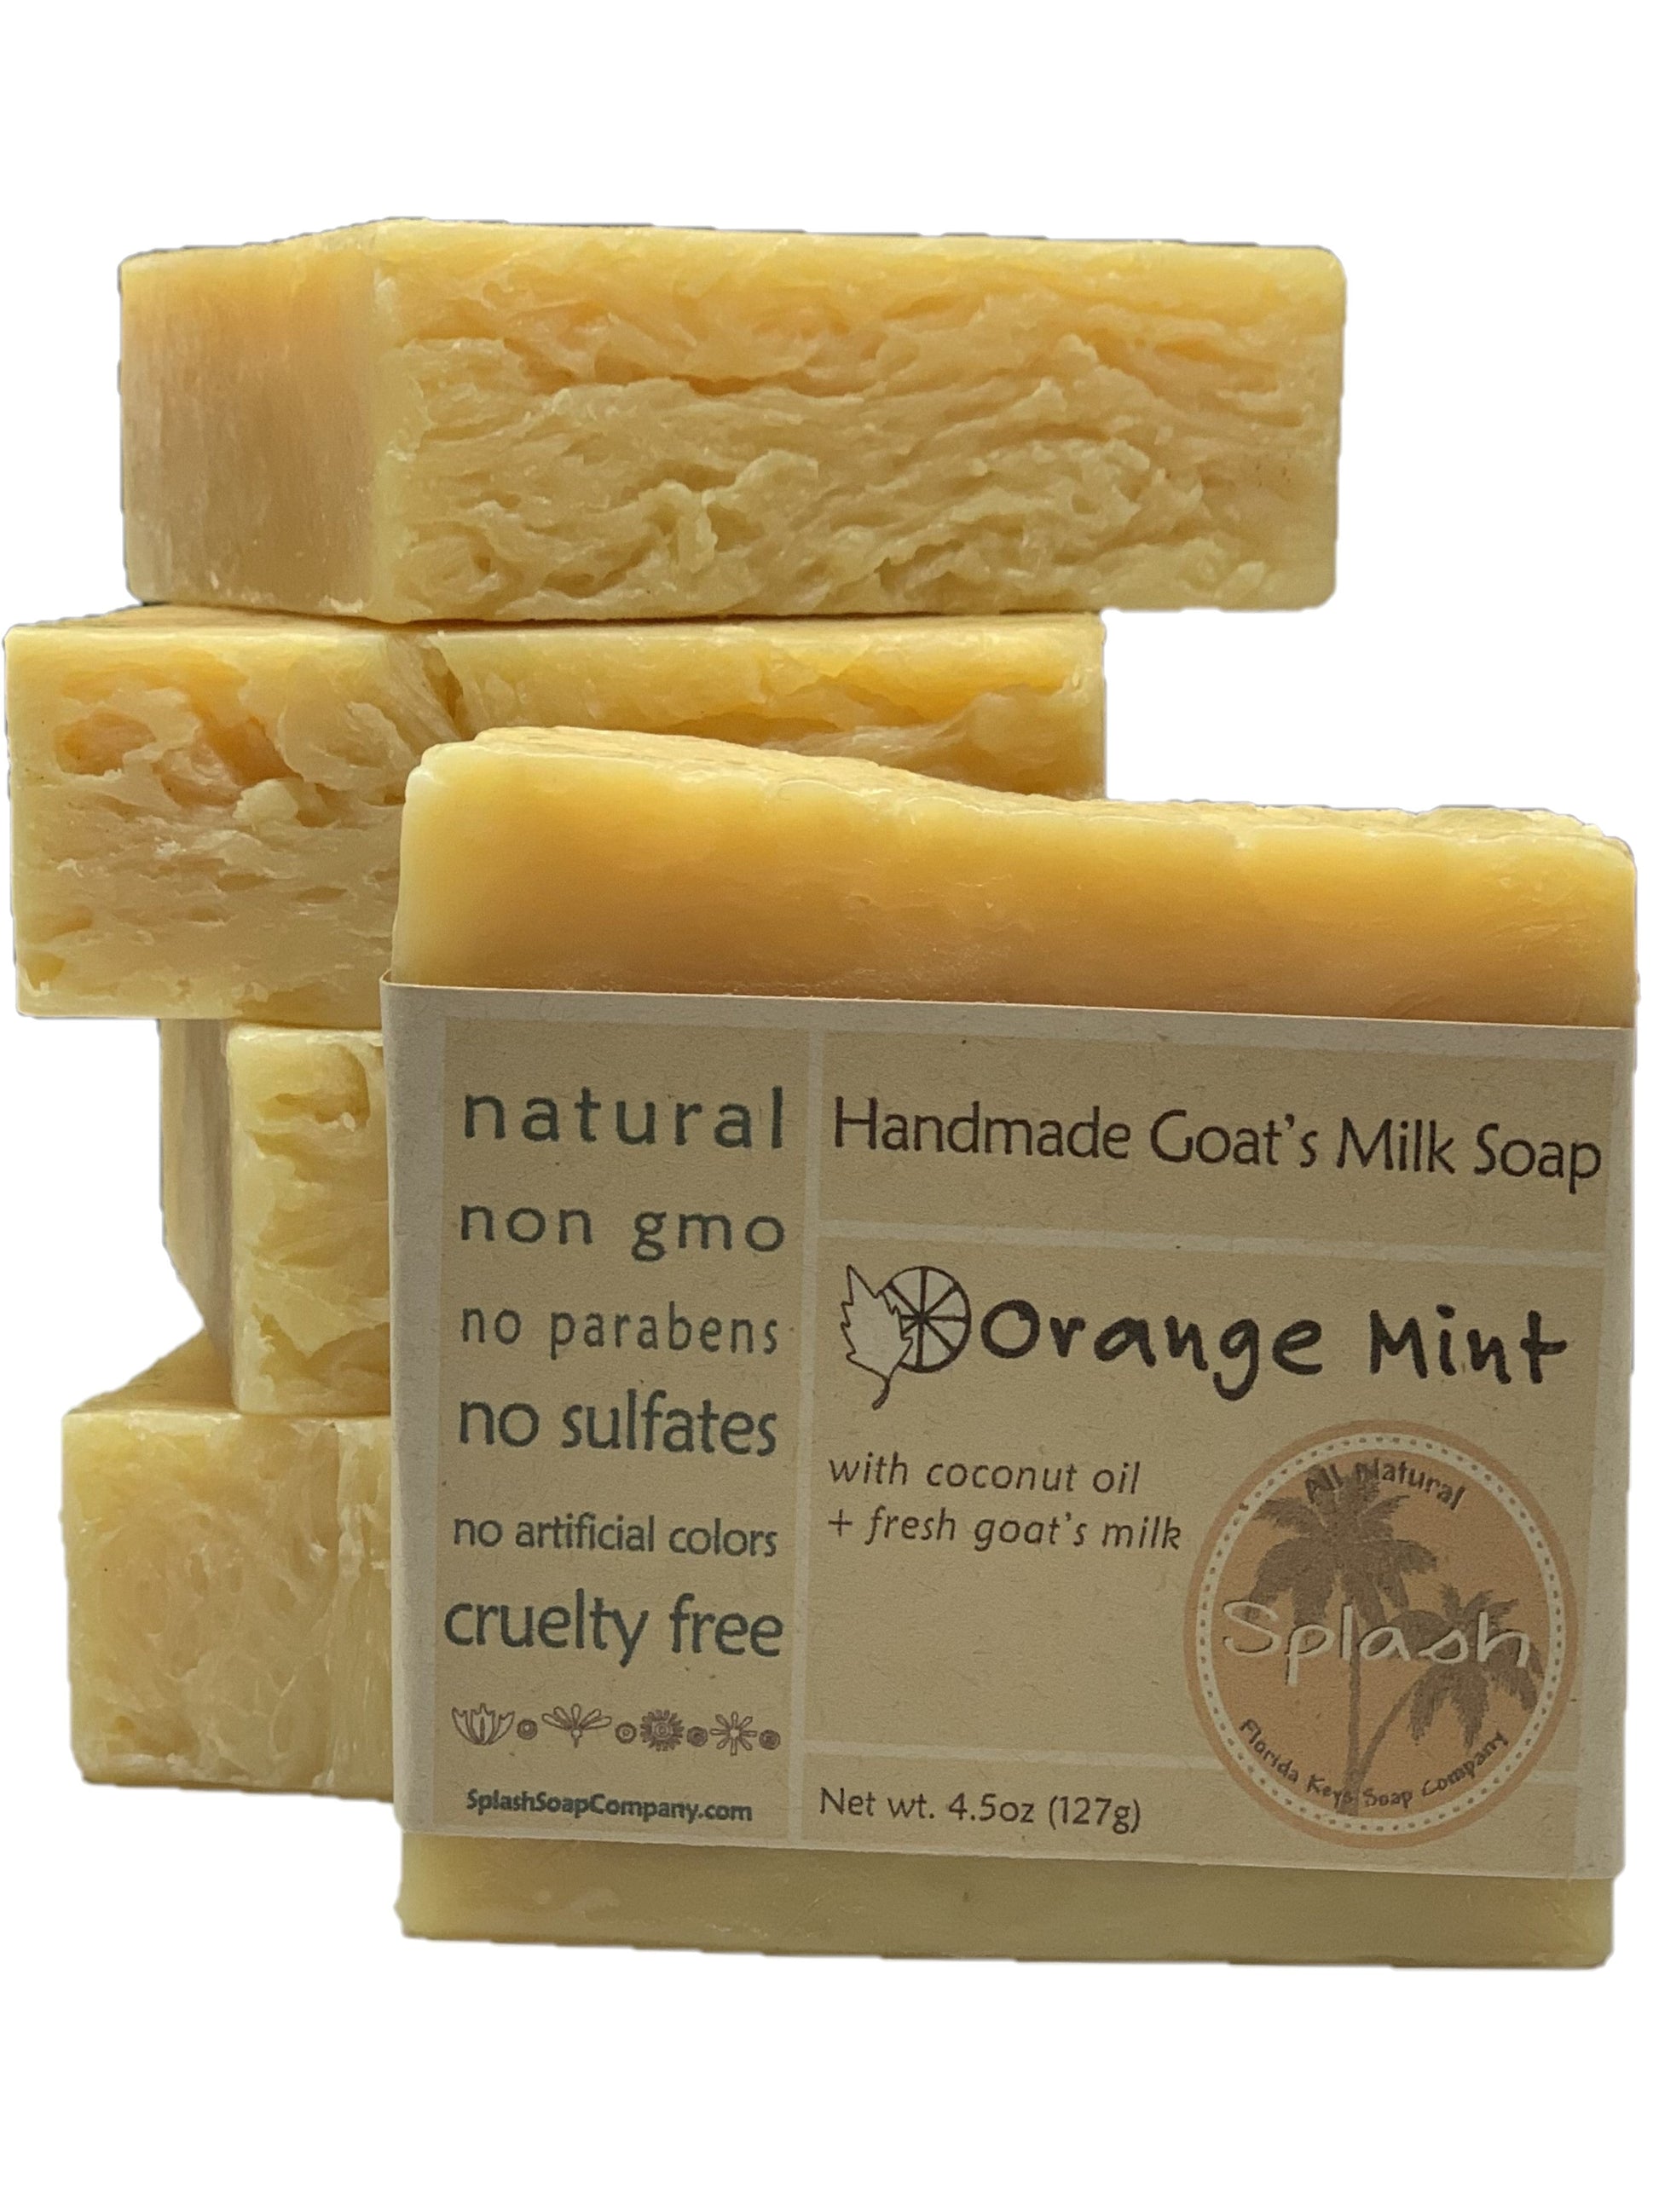 Orange Mint - Splash Soap Company